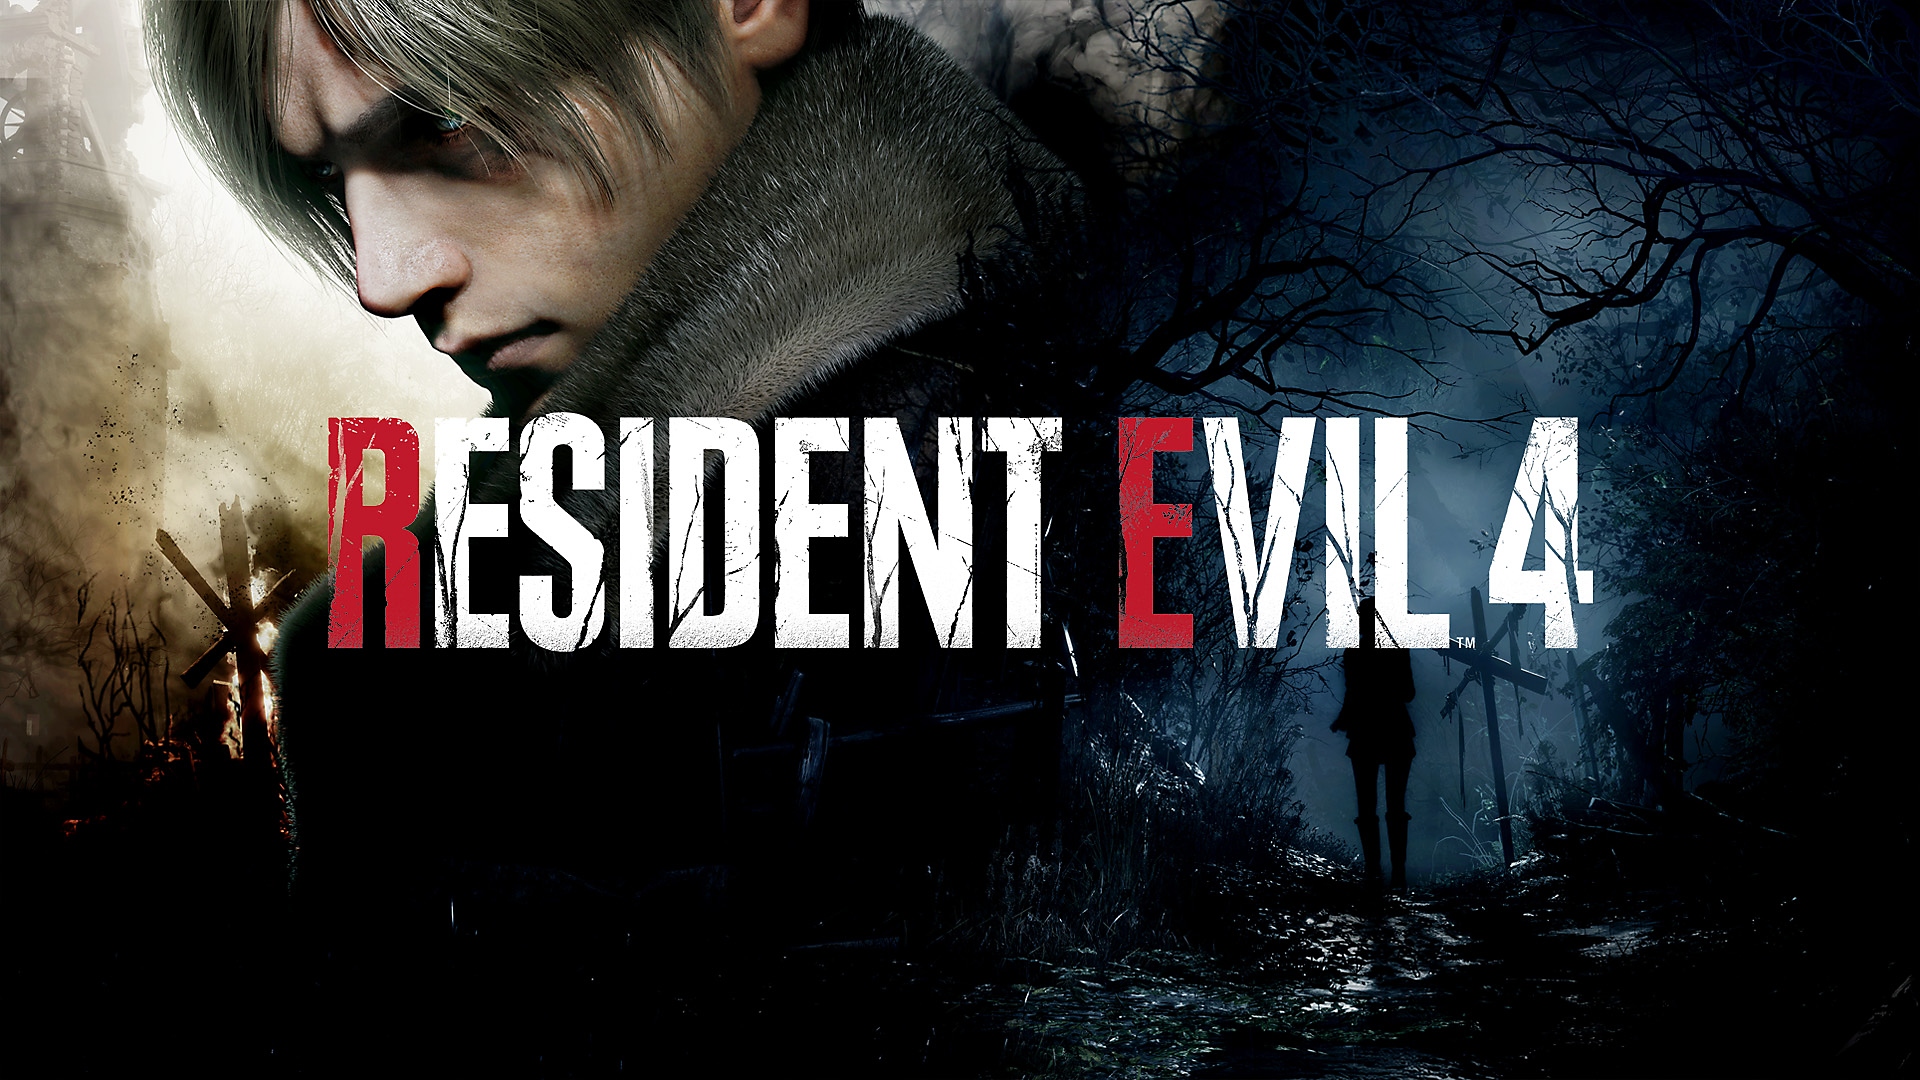 Resident Evil 4 - Terceiro trailer | Jogos PS5 e PS4